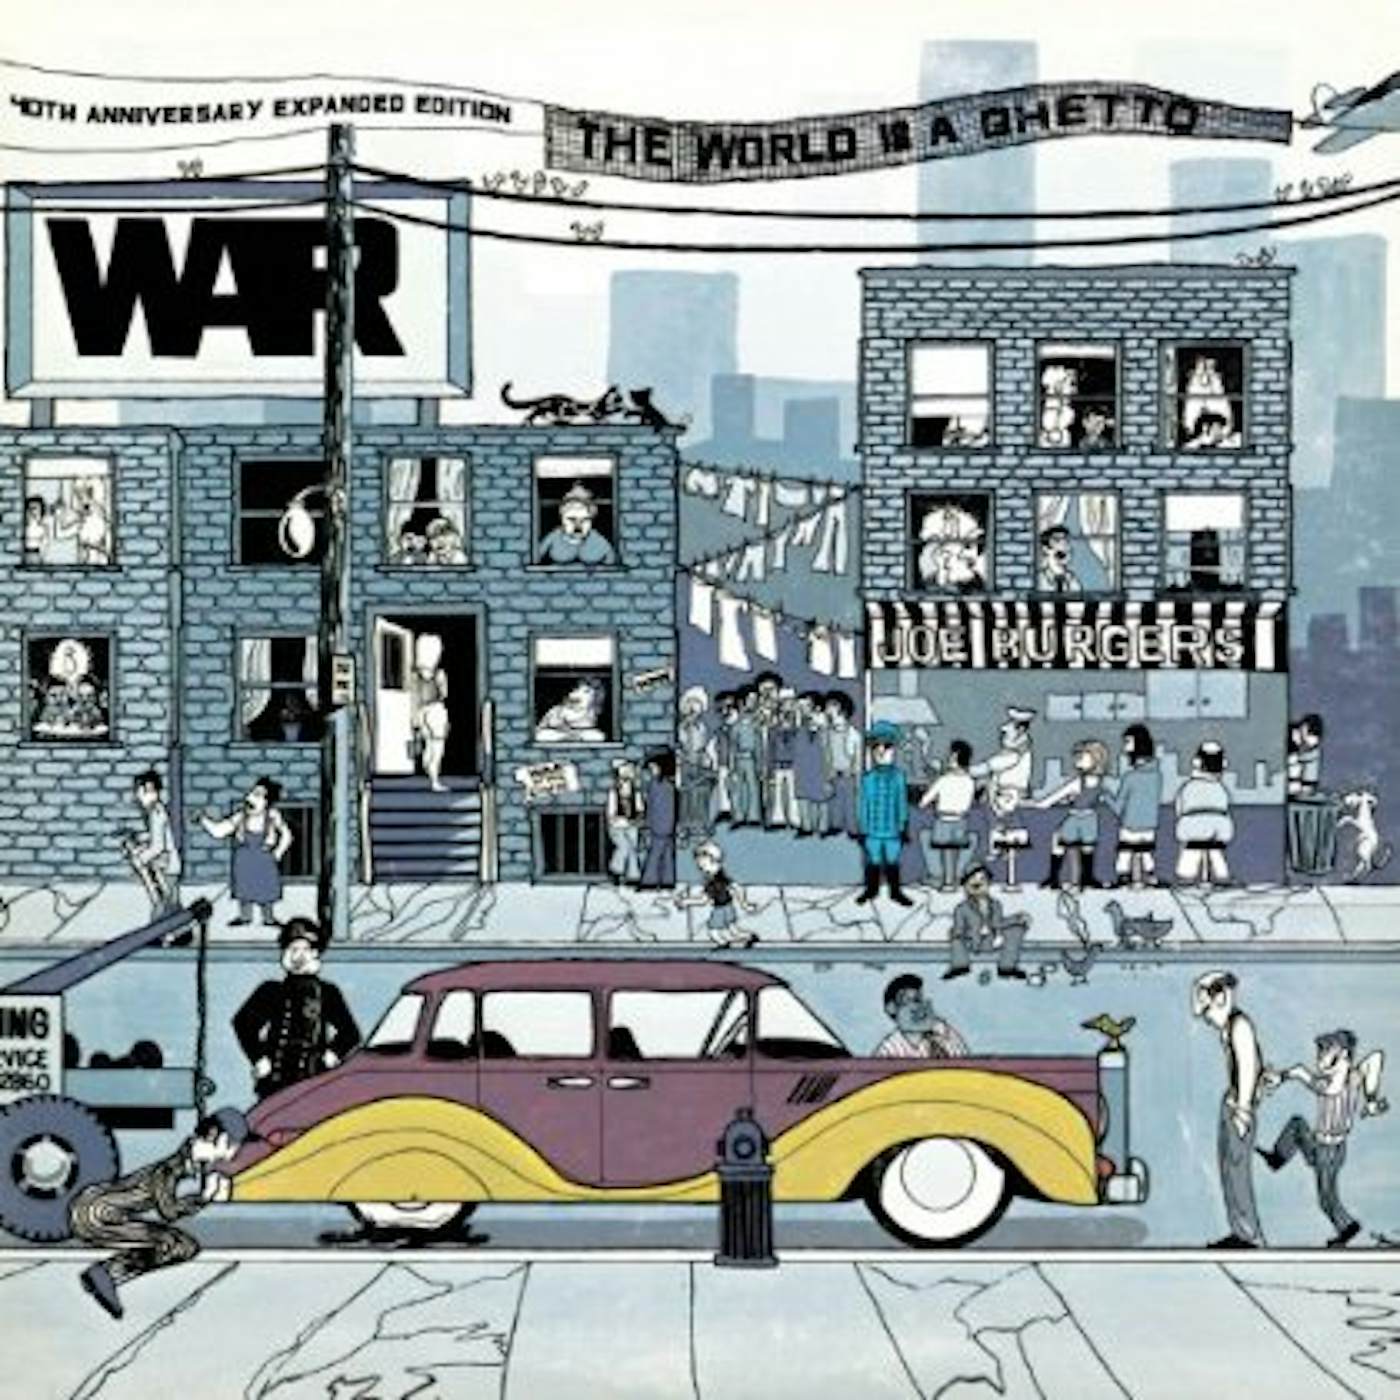 War WORLD IS A GHETTO: 40TH ANNIVERSARY EDITION CD